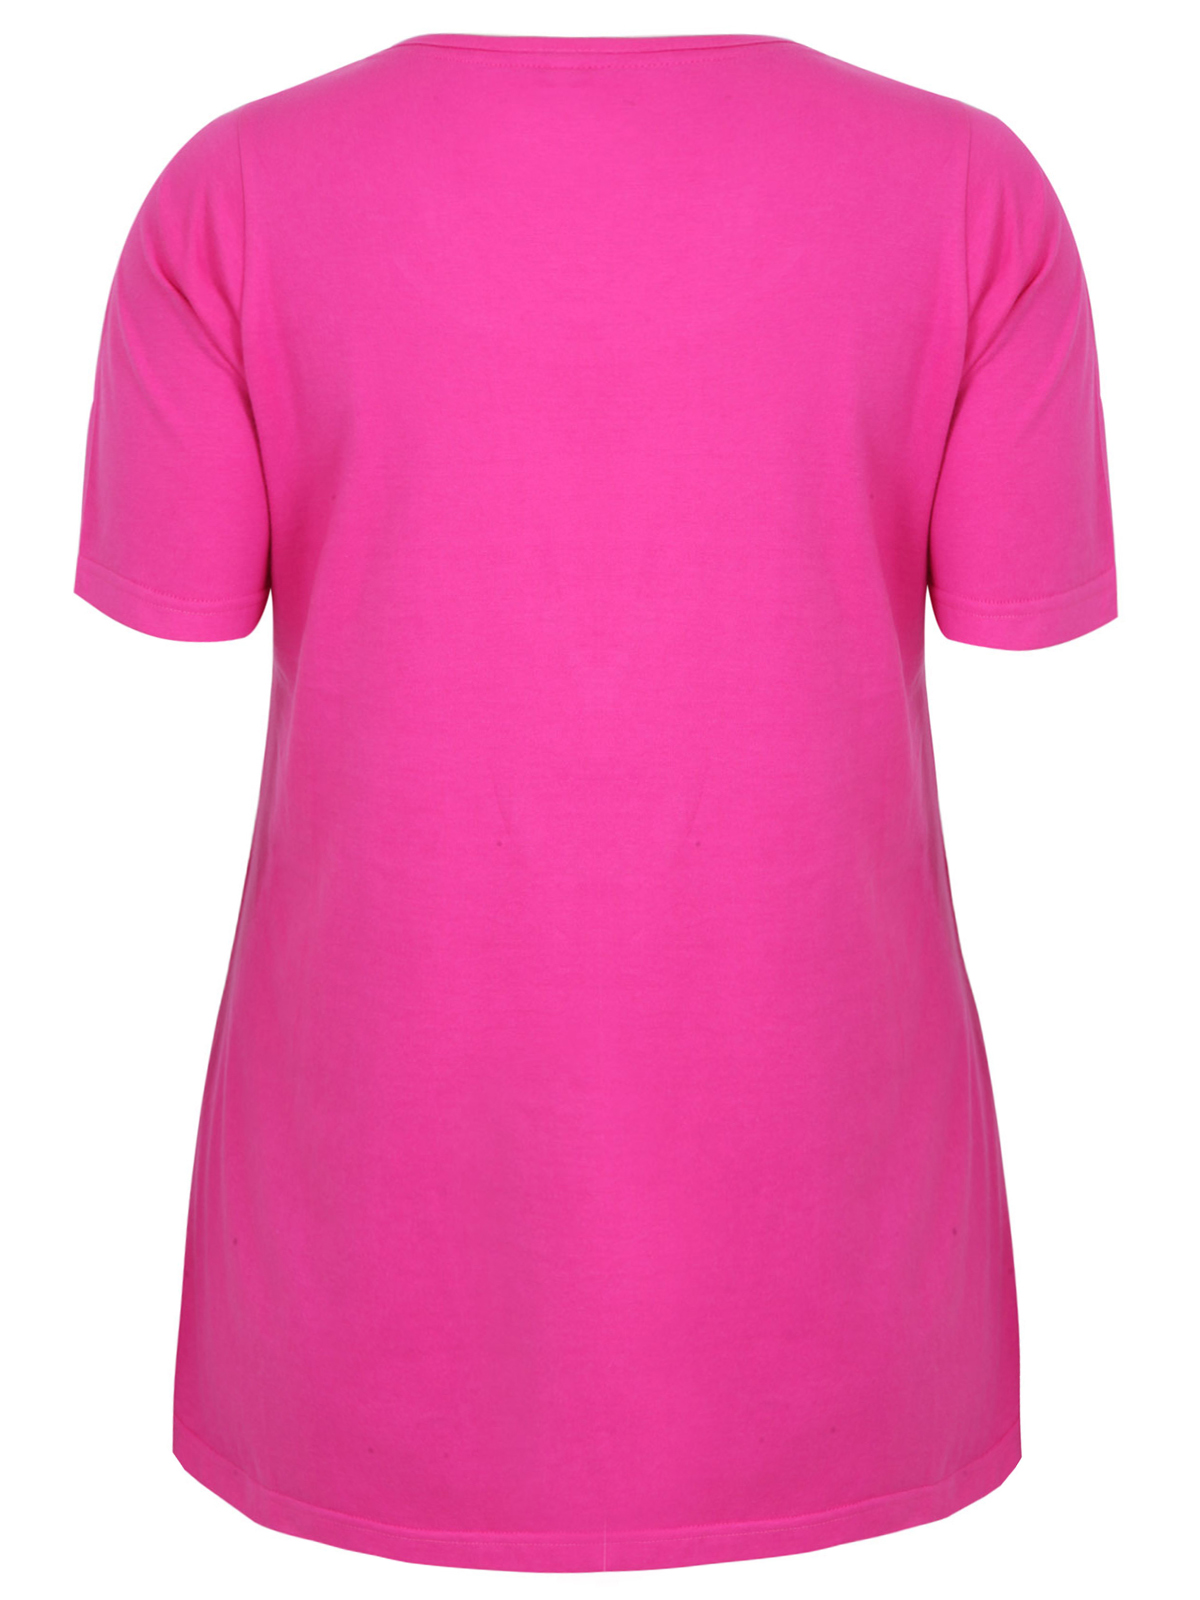 Curve Hot Pink Short Sleeve Pure Cotton Scoop Neck T Shirt Plus